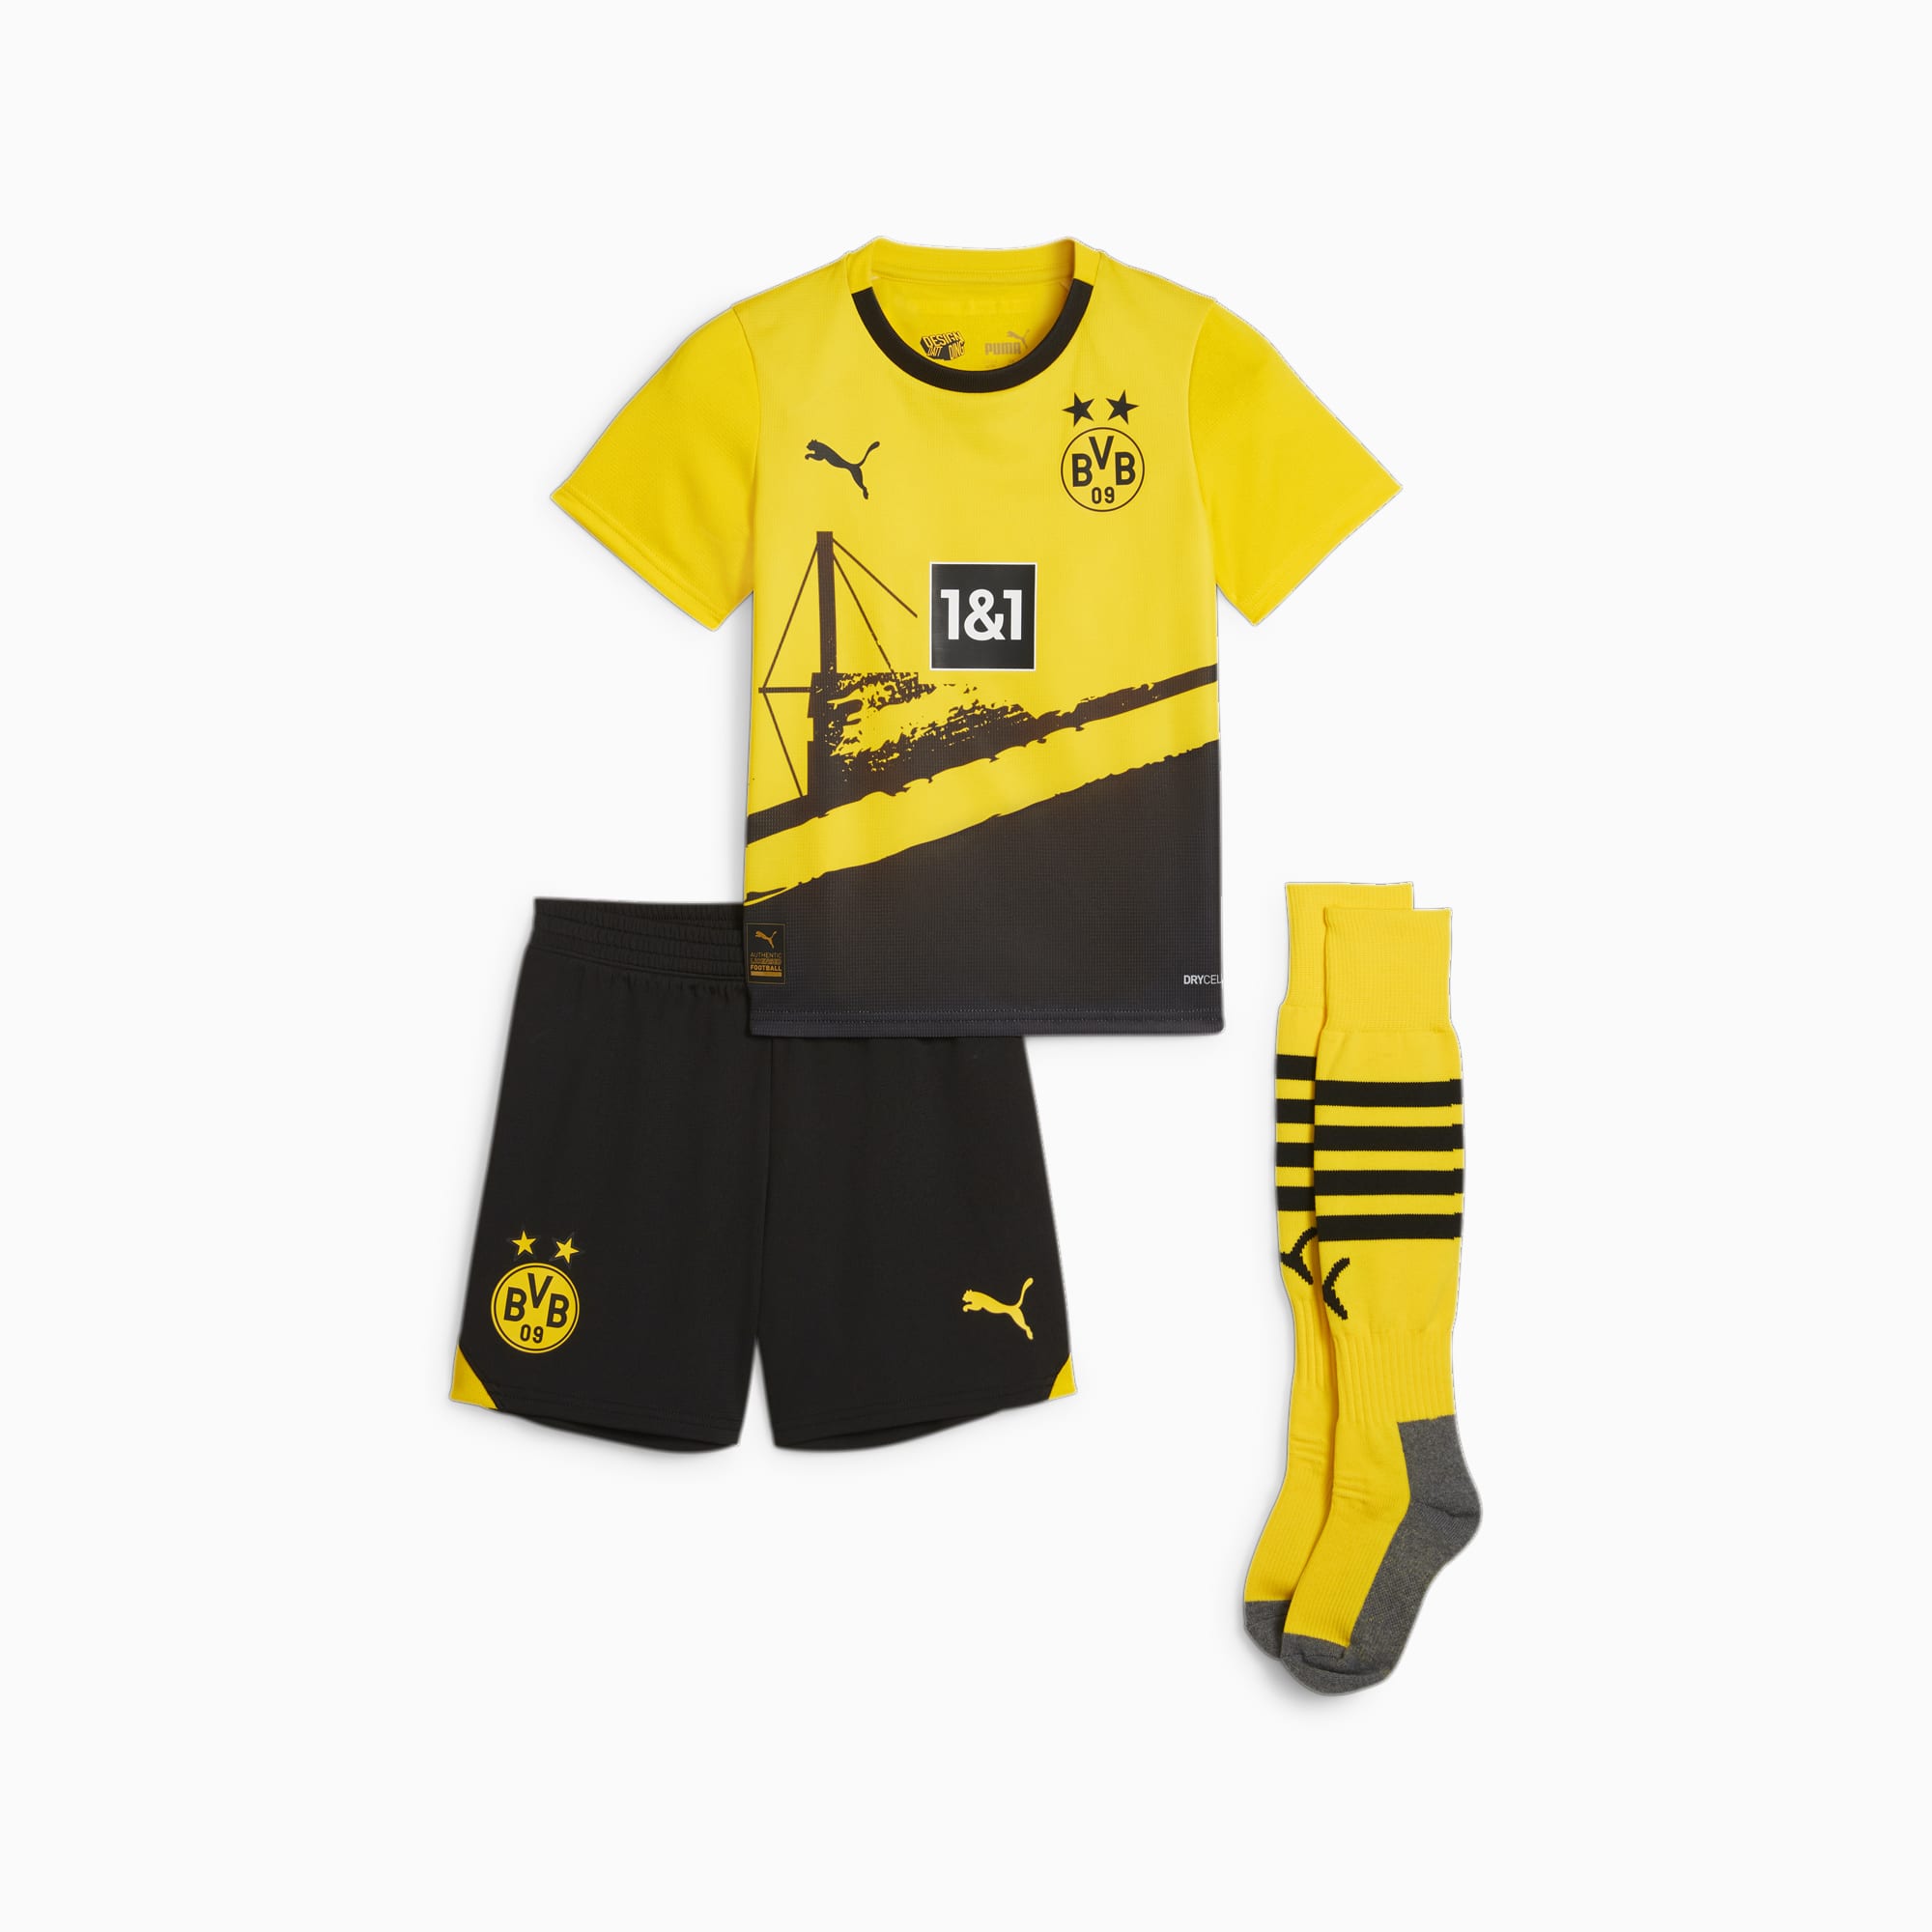 PUMA Borussia Dortmund 23/24 Home Minikit, Cyber Yellow/Black, Size 92, Clothing